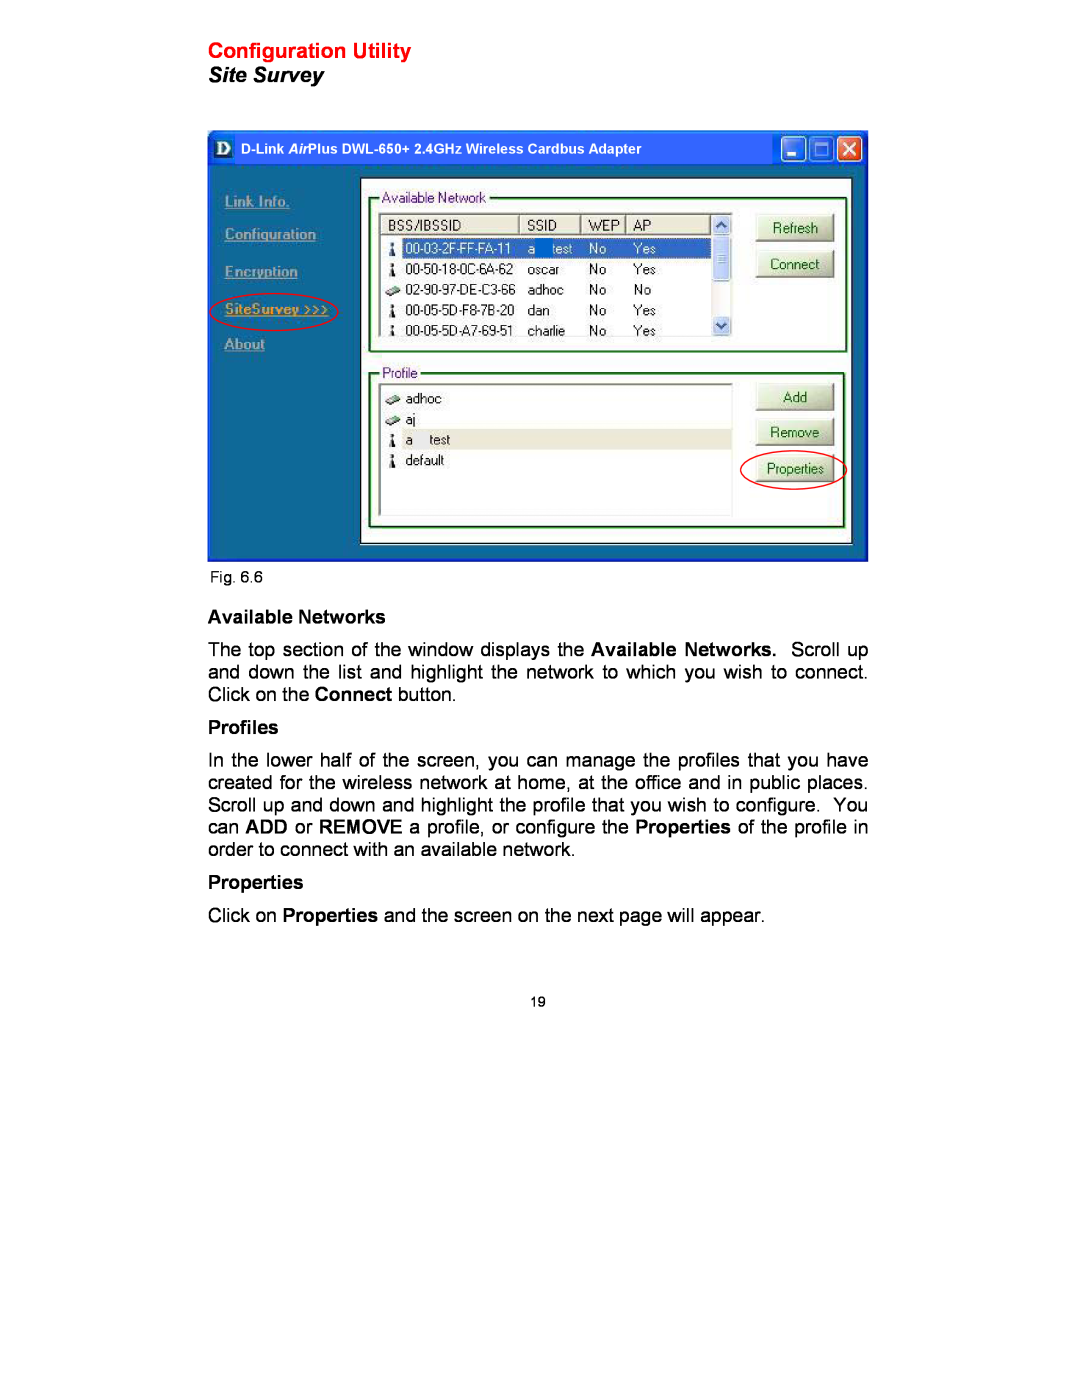 D-Link DWL-650 manual Site Survey, Available Networks, Profiles, Properties, Configuration Utility 